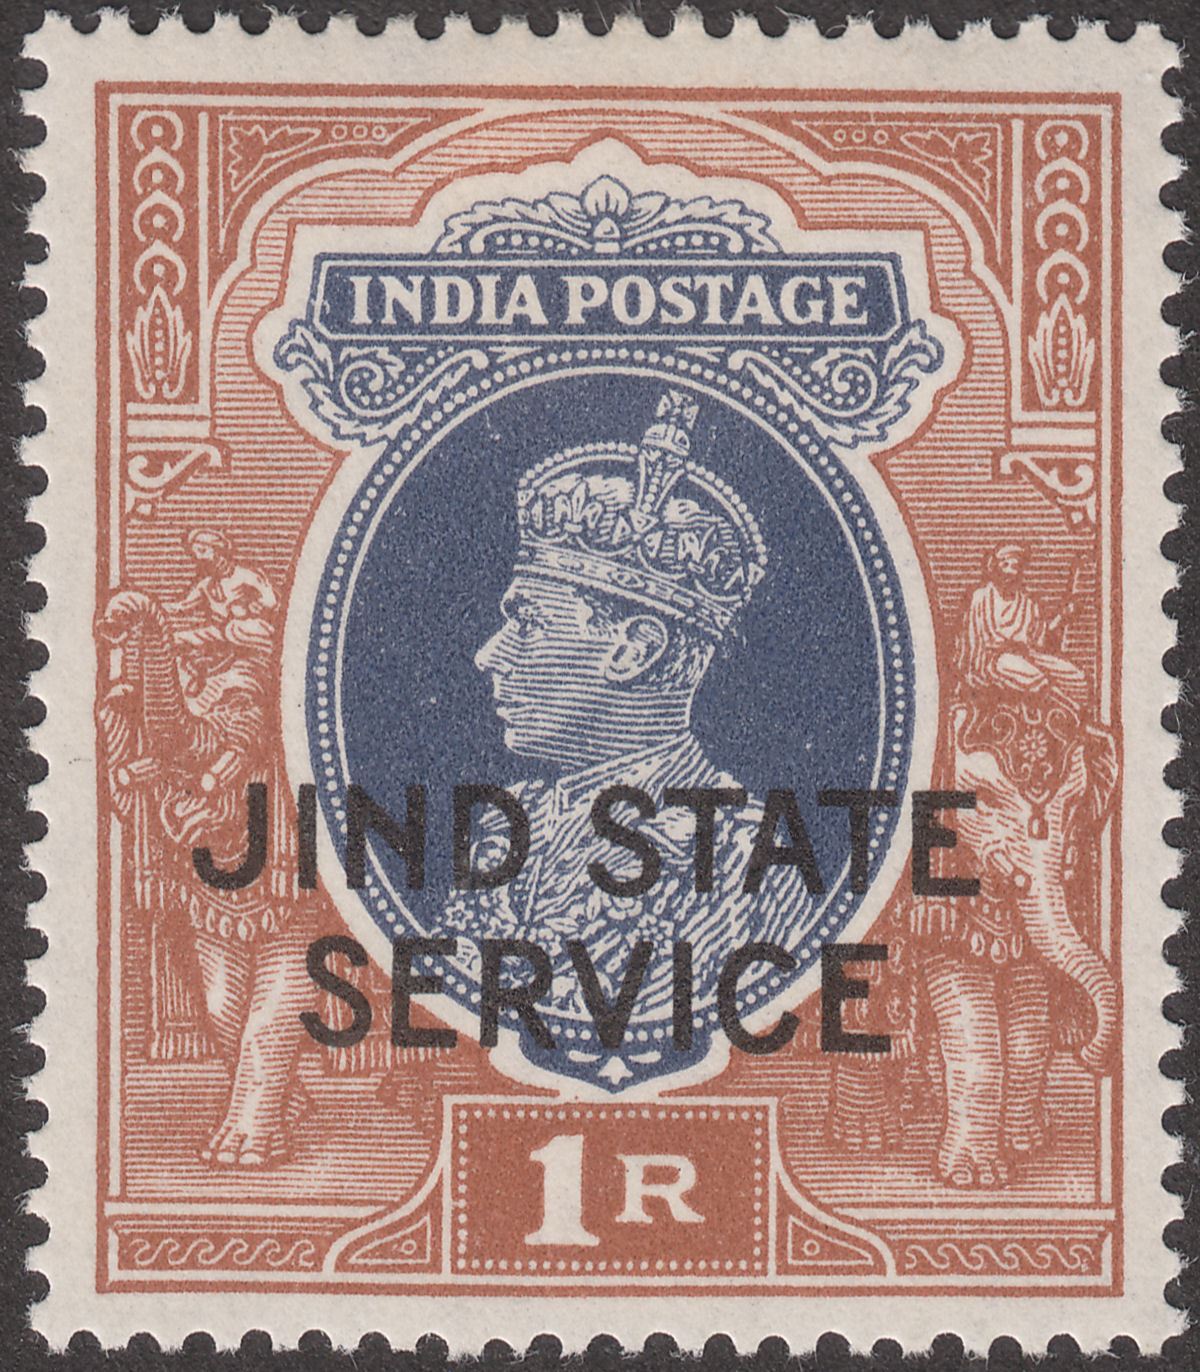 Indian States Jind 1940 KGVI Official Service Overprint 1r Mint SG O69 cat £75